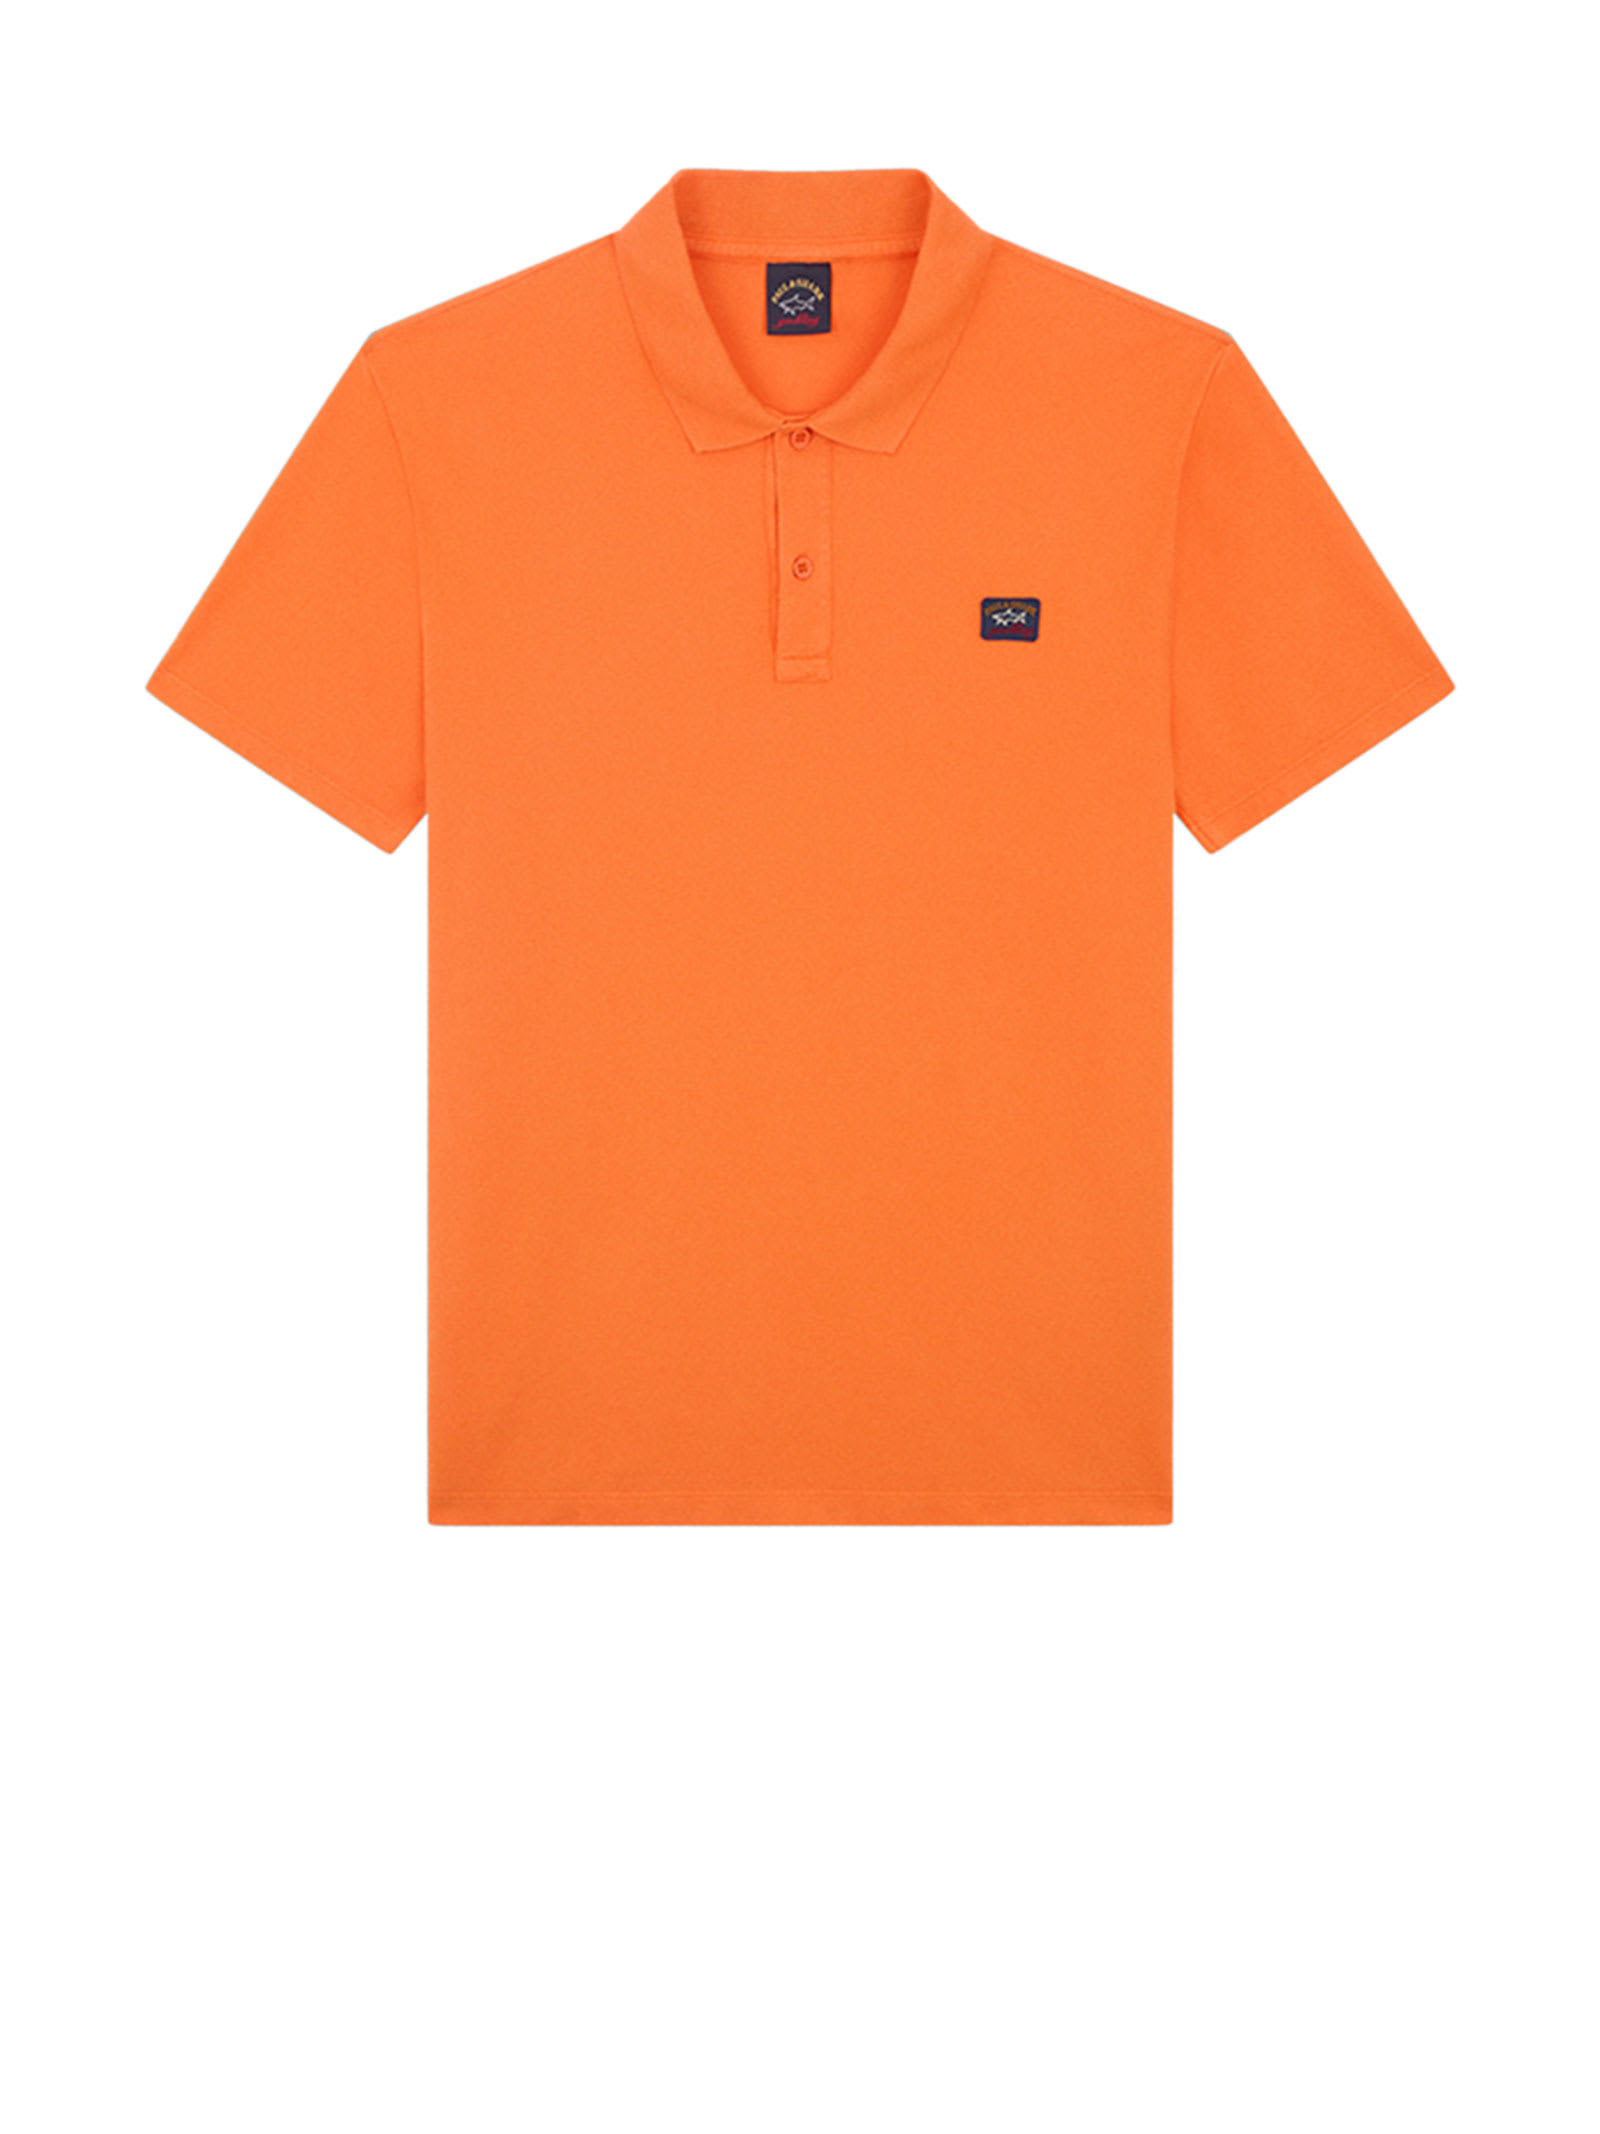 Paul&amp;shark Polo Shirt In Dyed Piqué Cotton In Arancio